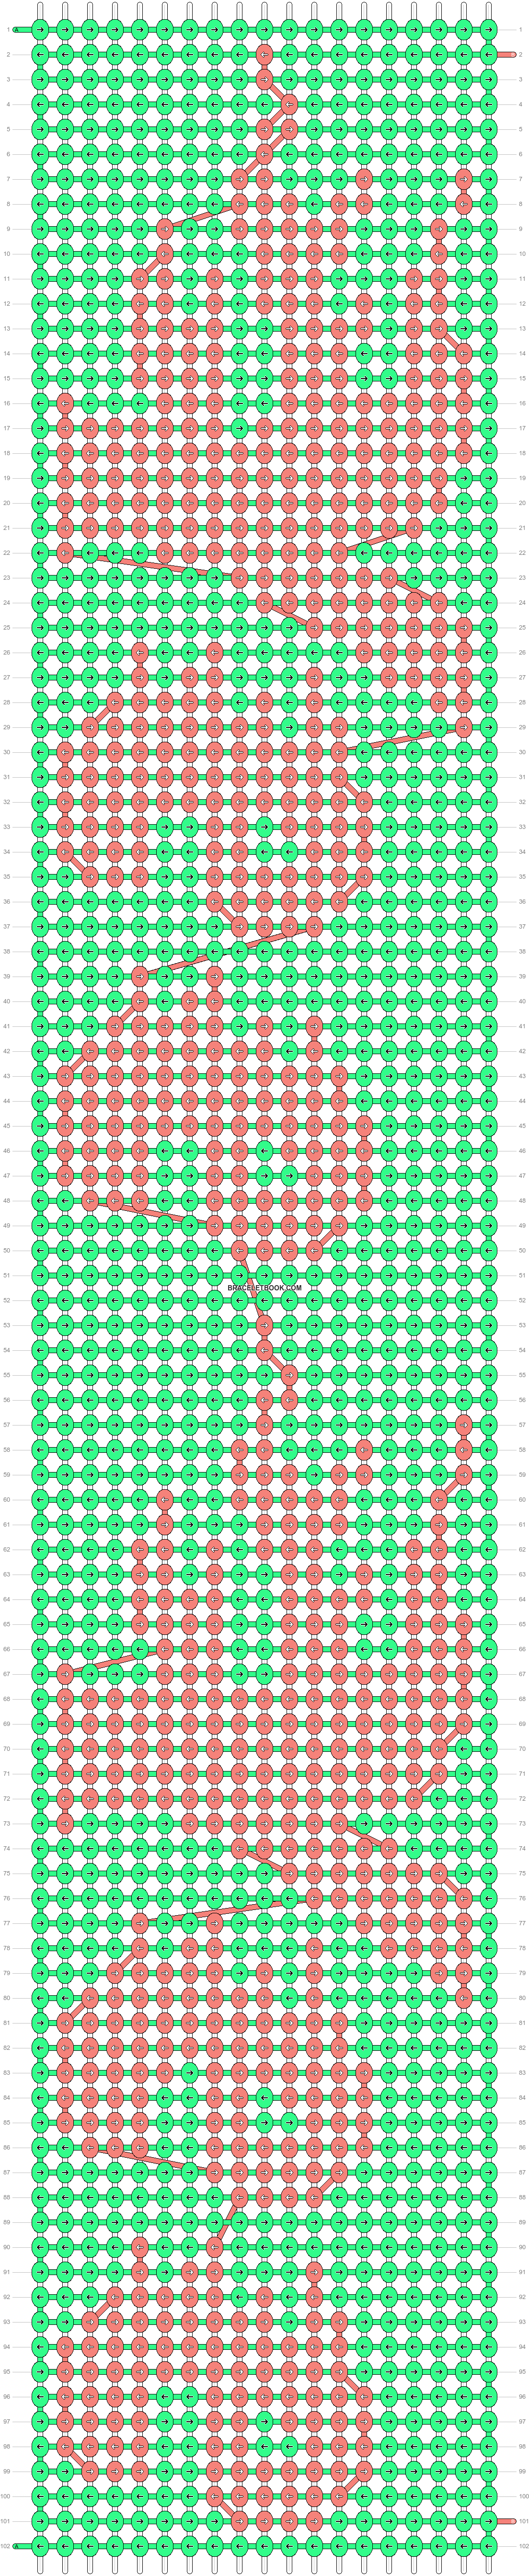 Alpha pattern #35988 variation #36070 pattern